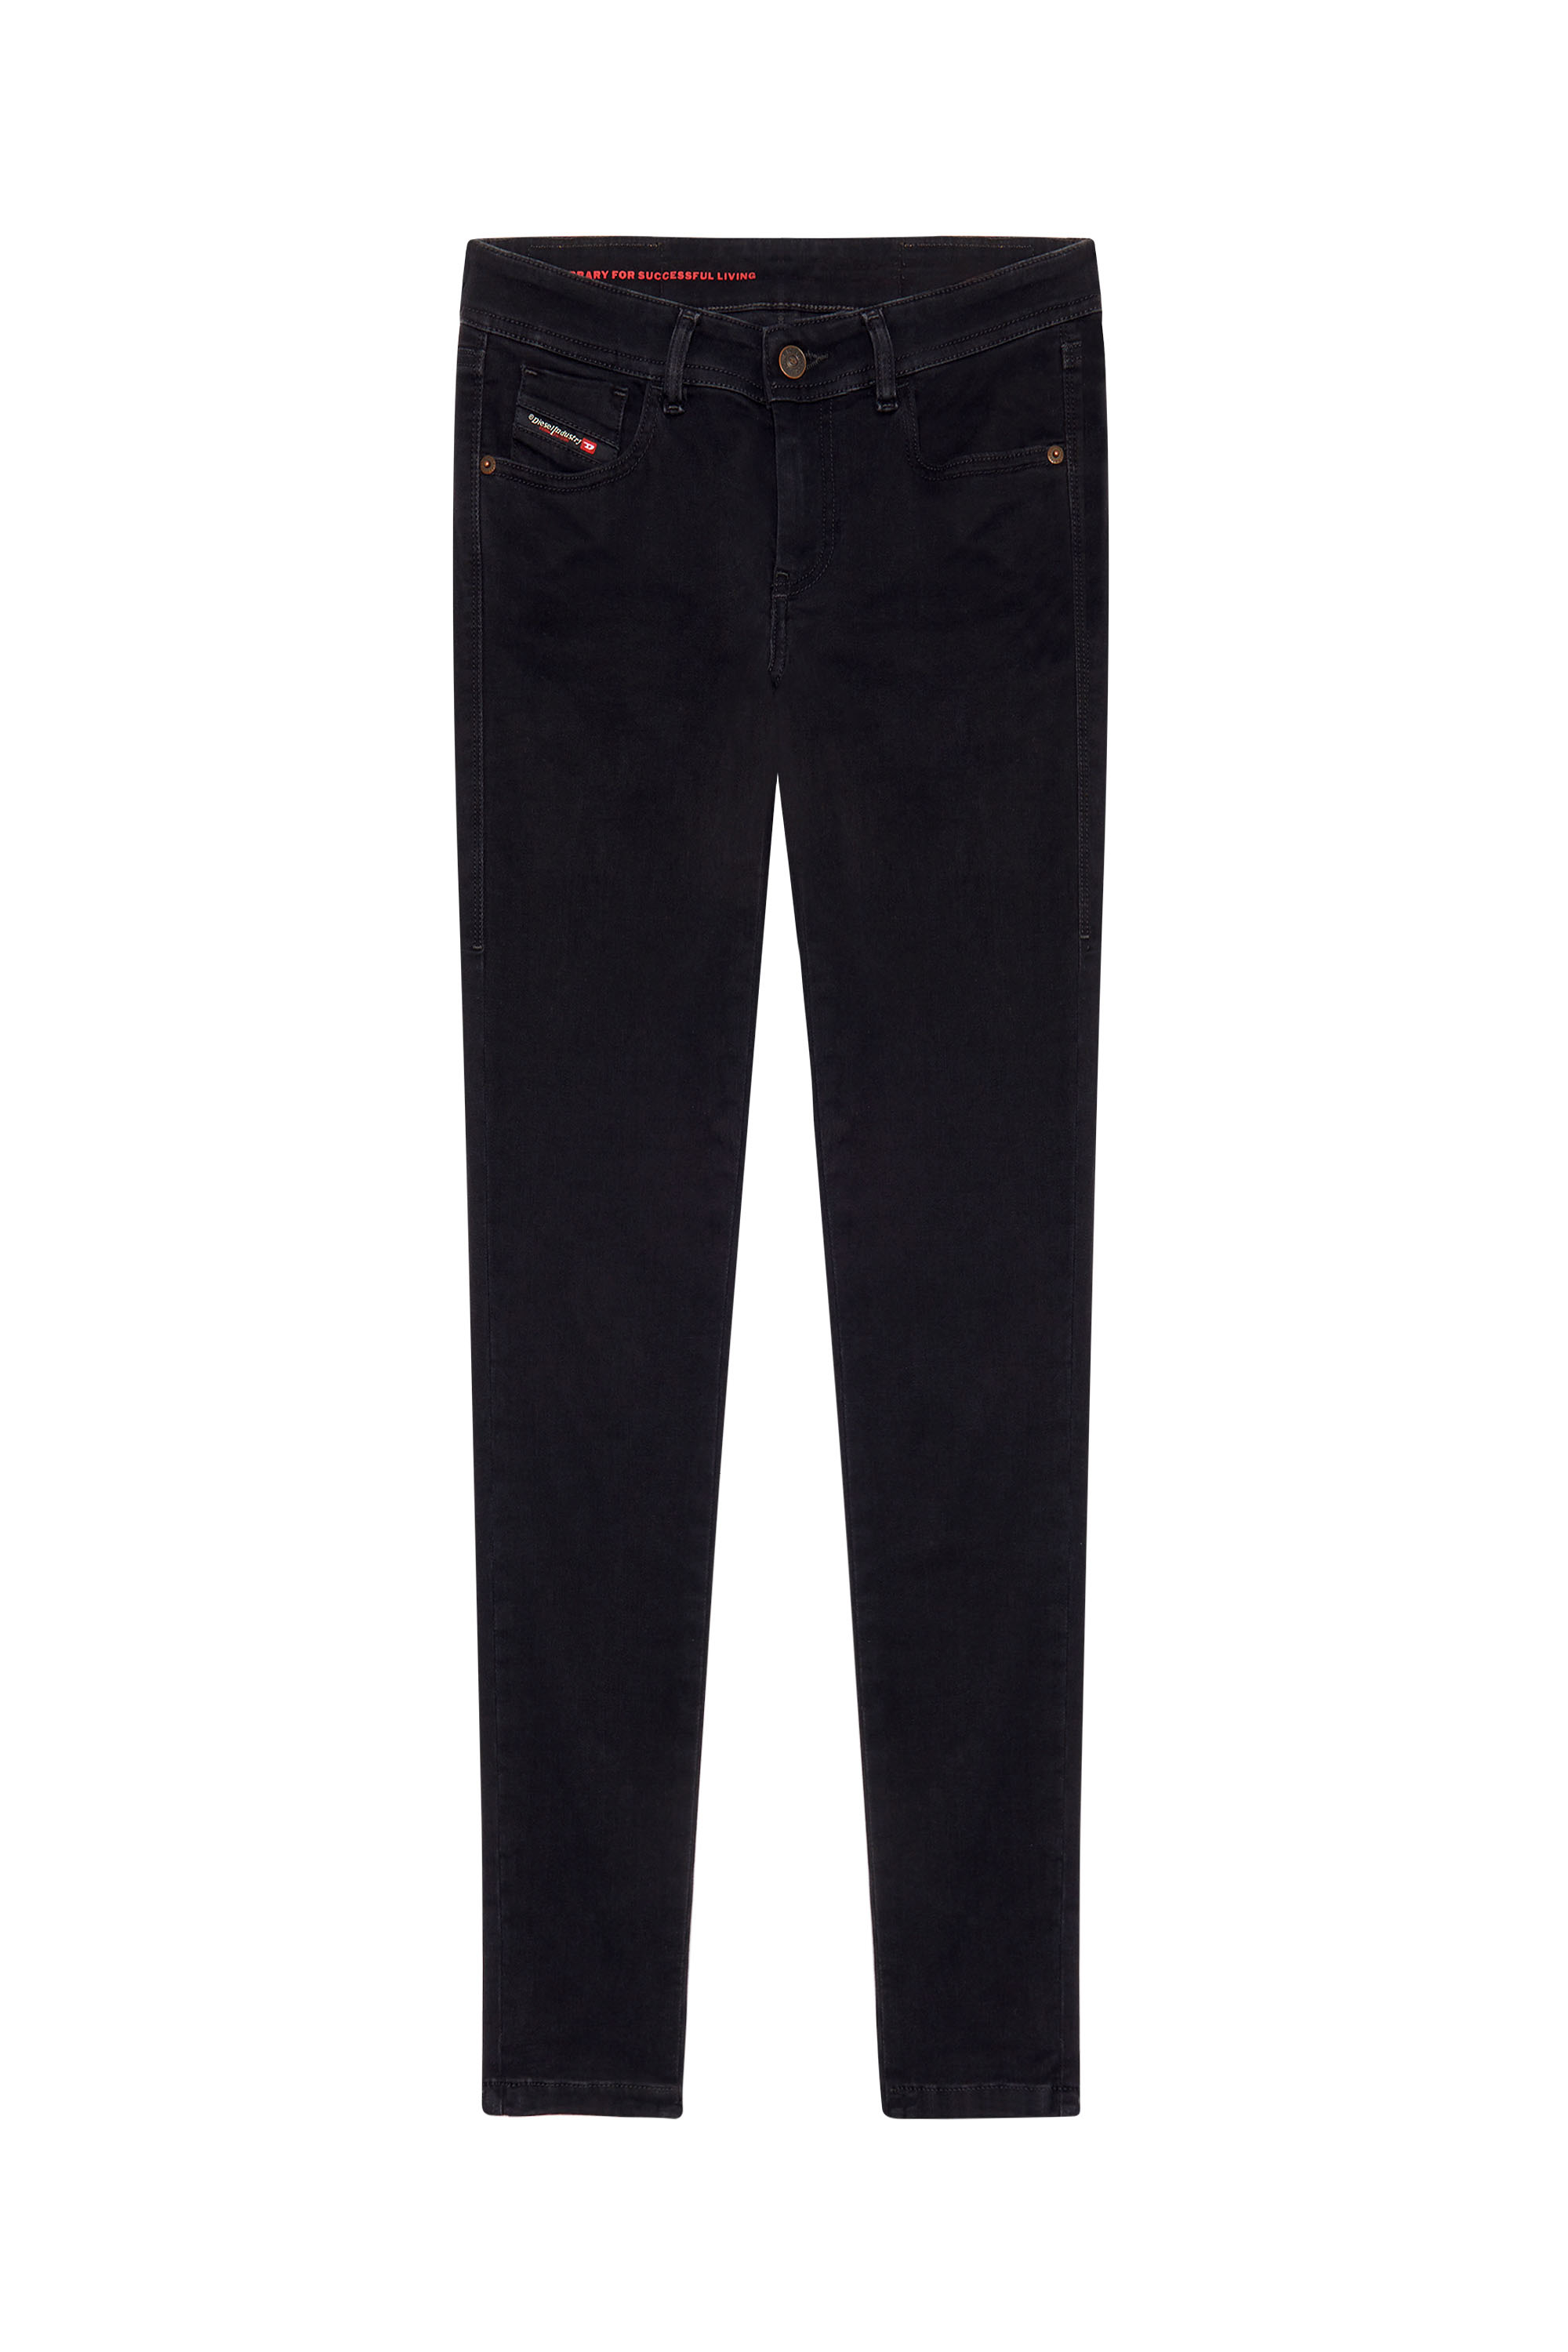 Super skinny Jeans 2018 Slandy-Low Z69VW, Black/Dark grey - Jeans